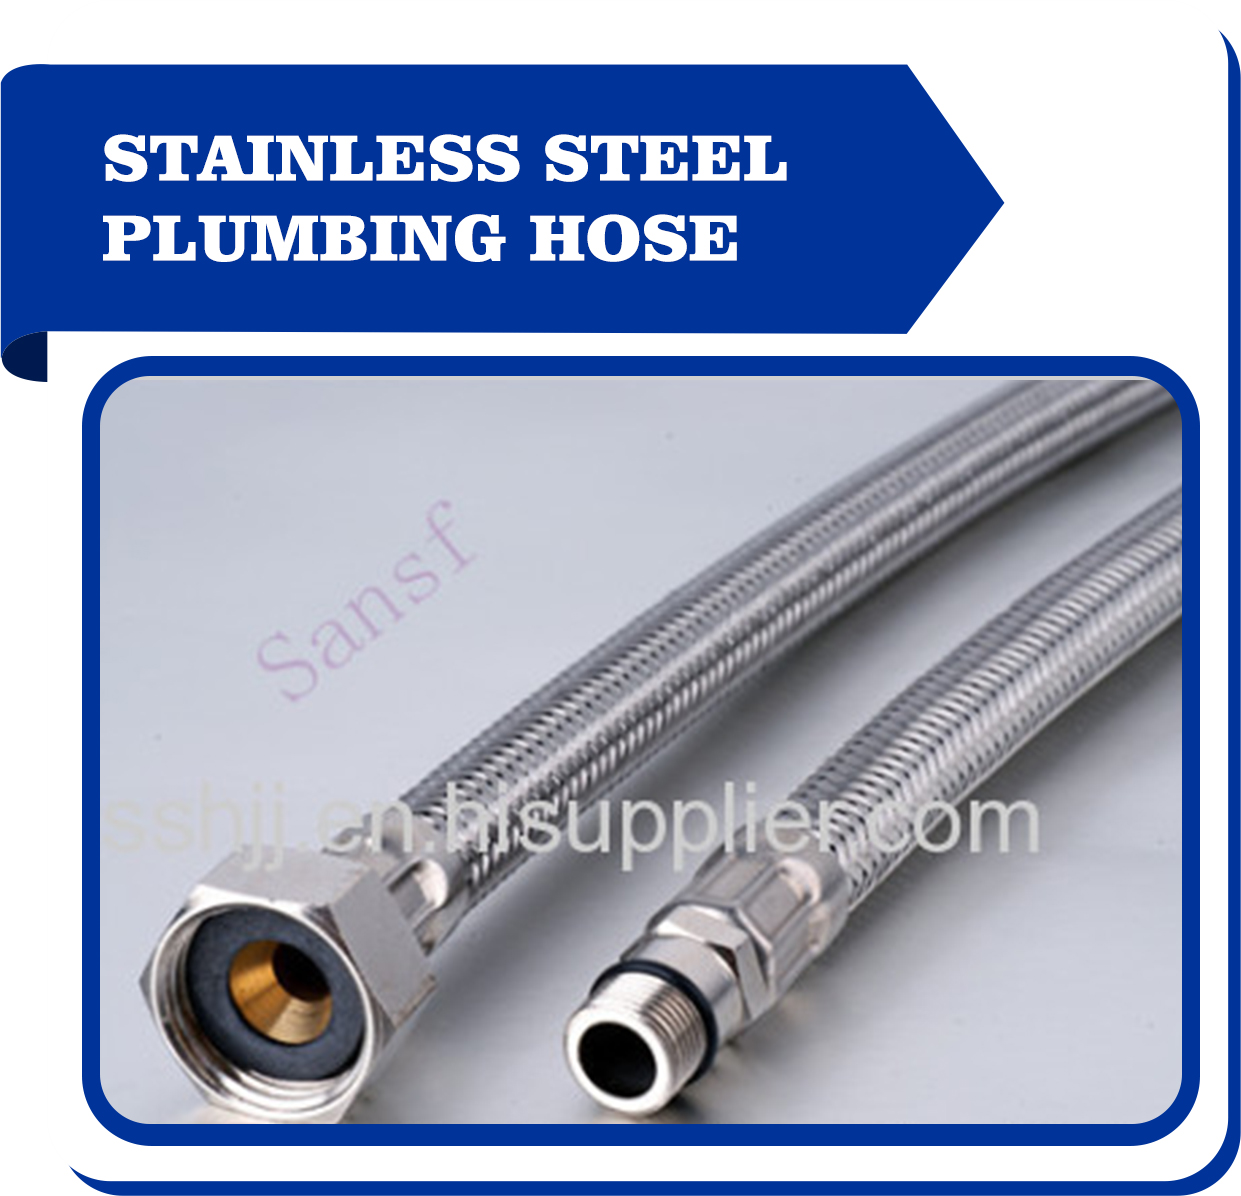 stainless steel plumbing hose